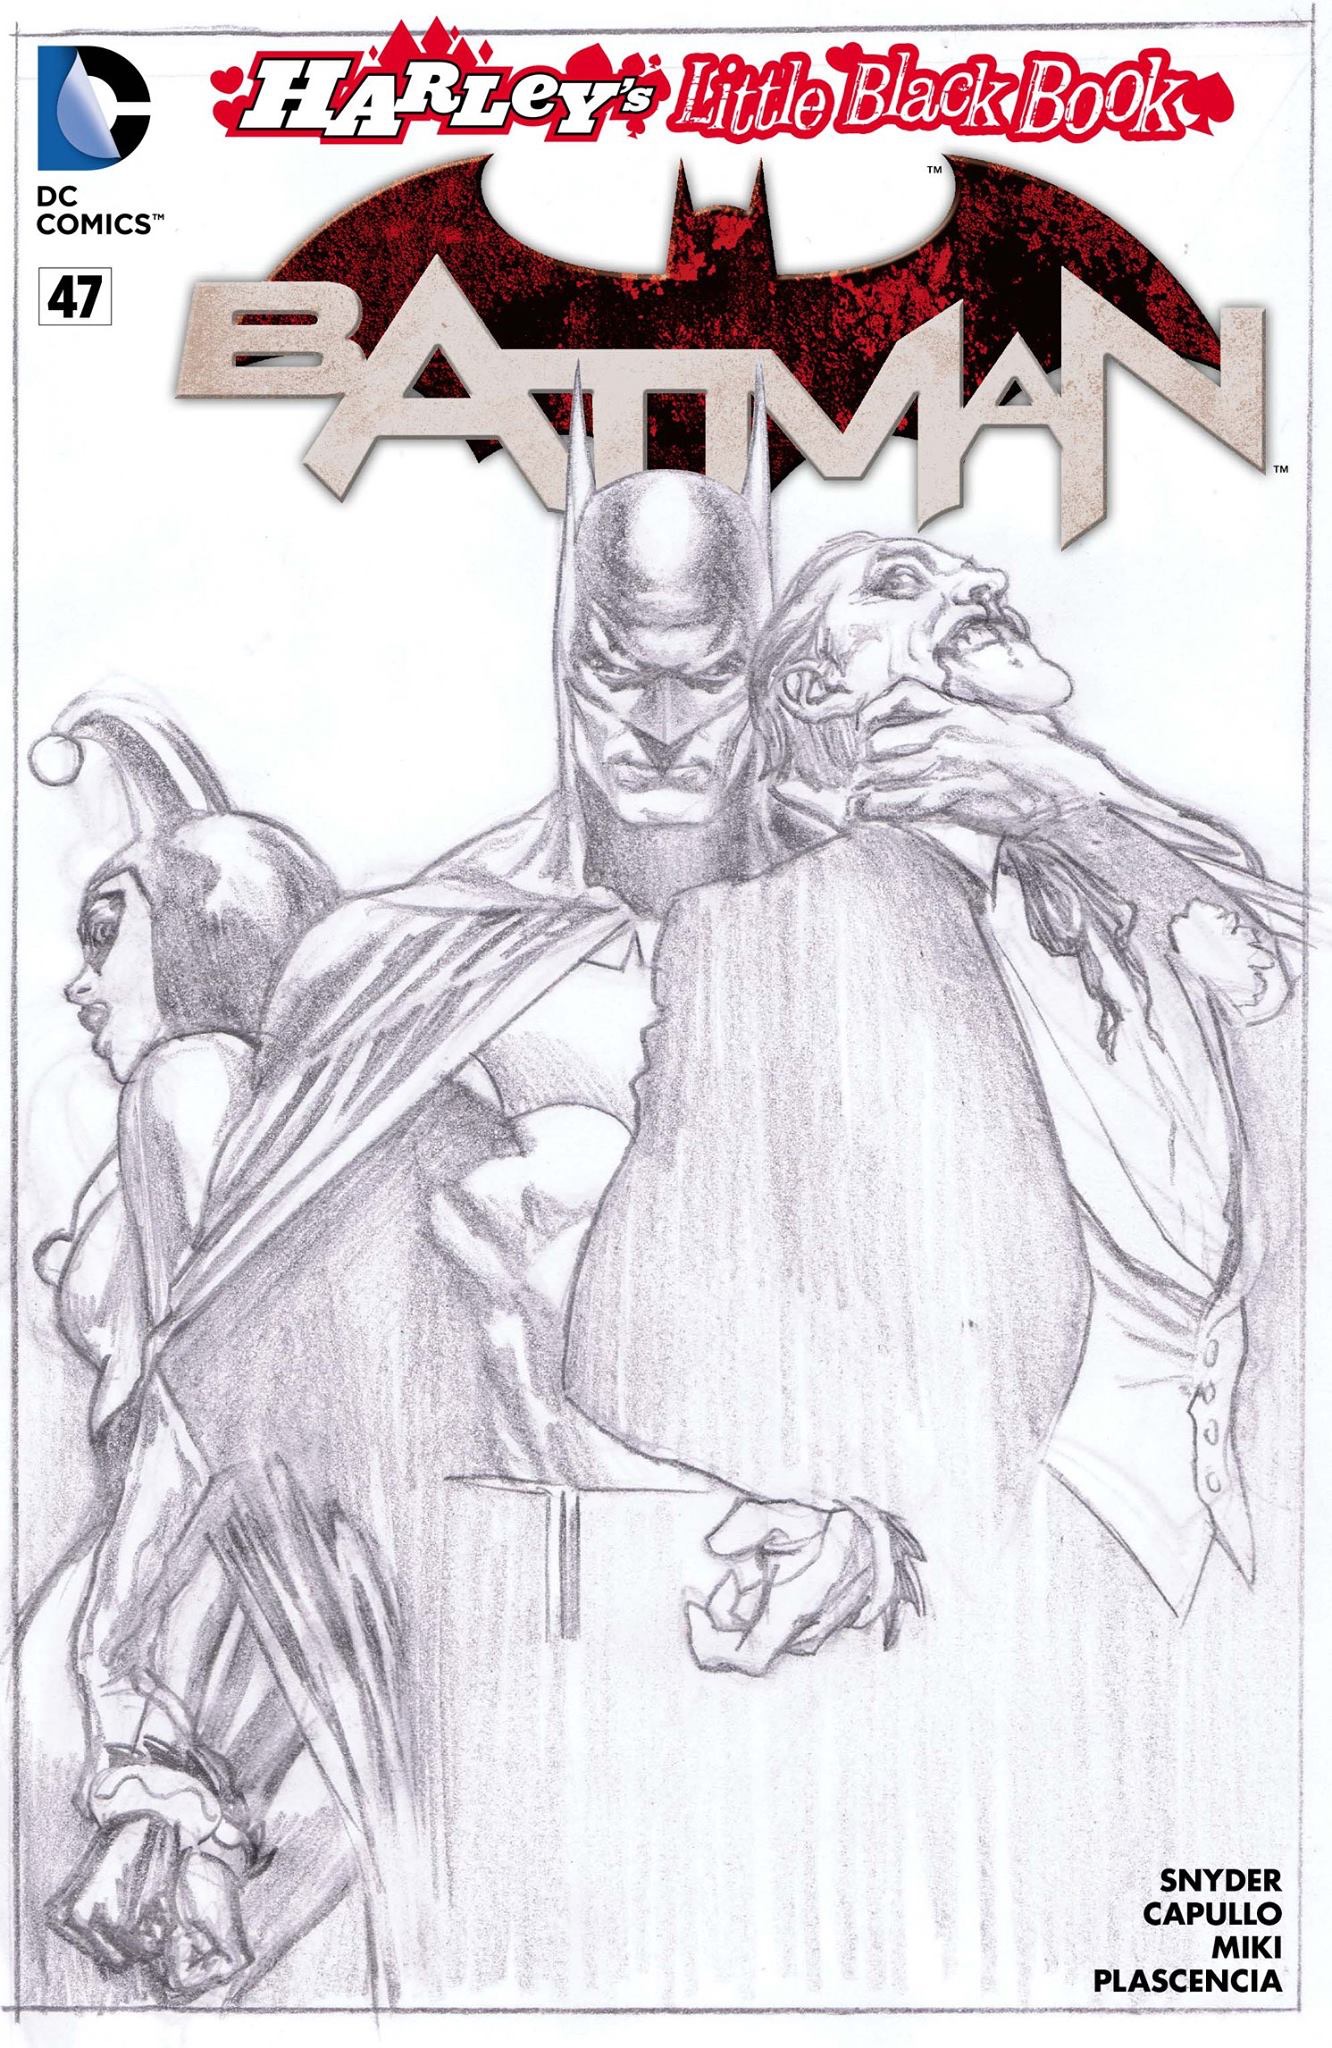 BATMAN #47 – Alex Ross Sketch | Comic Books and Cats